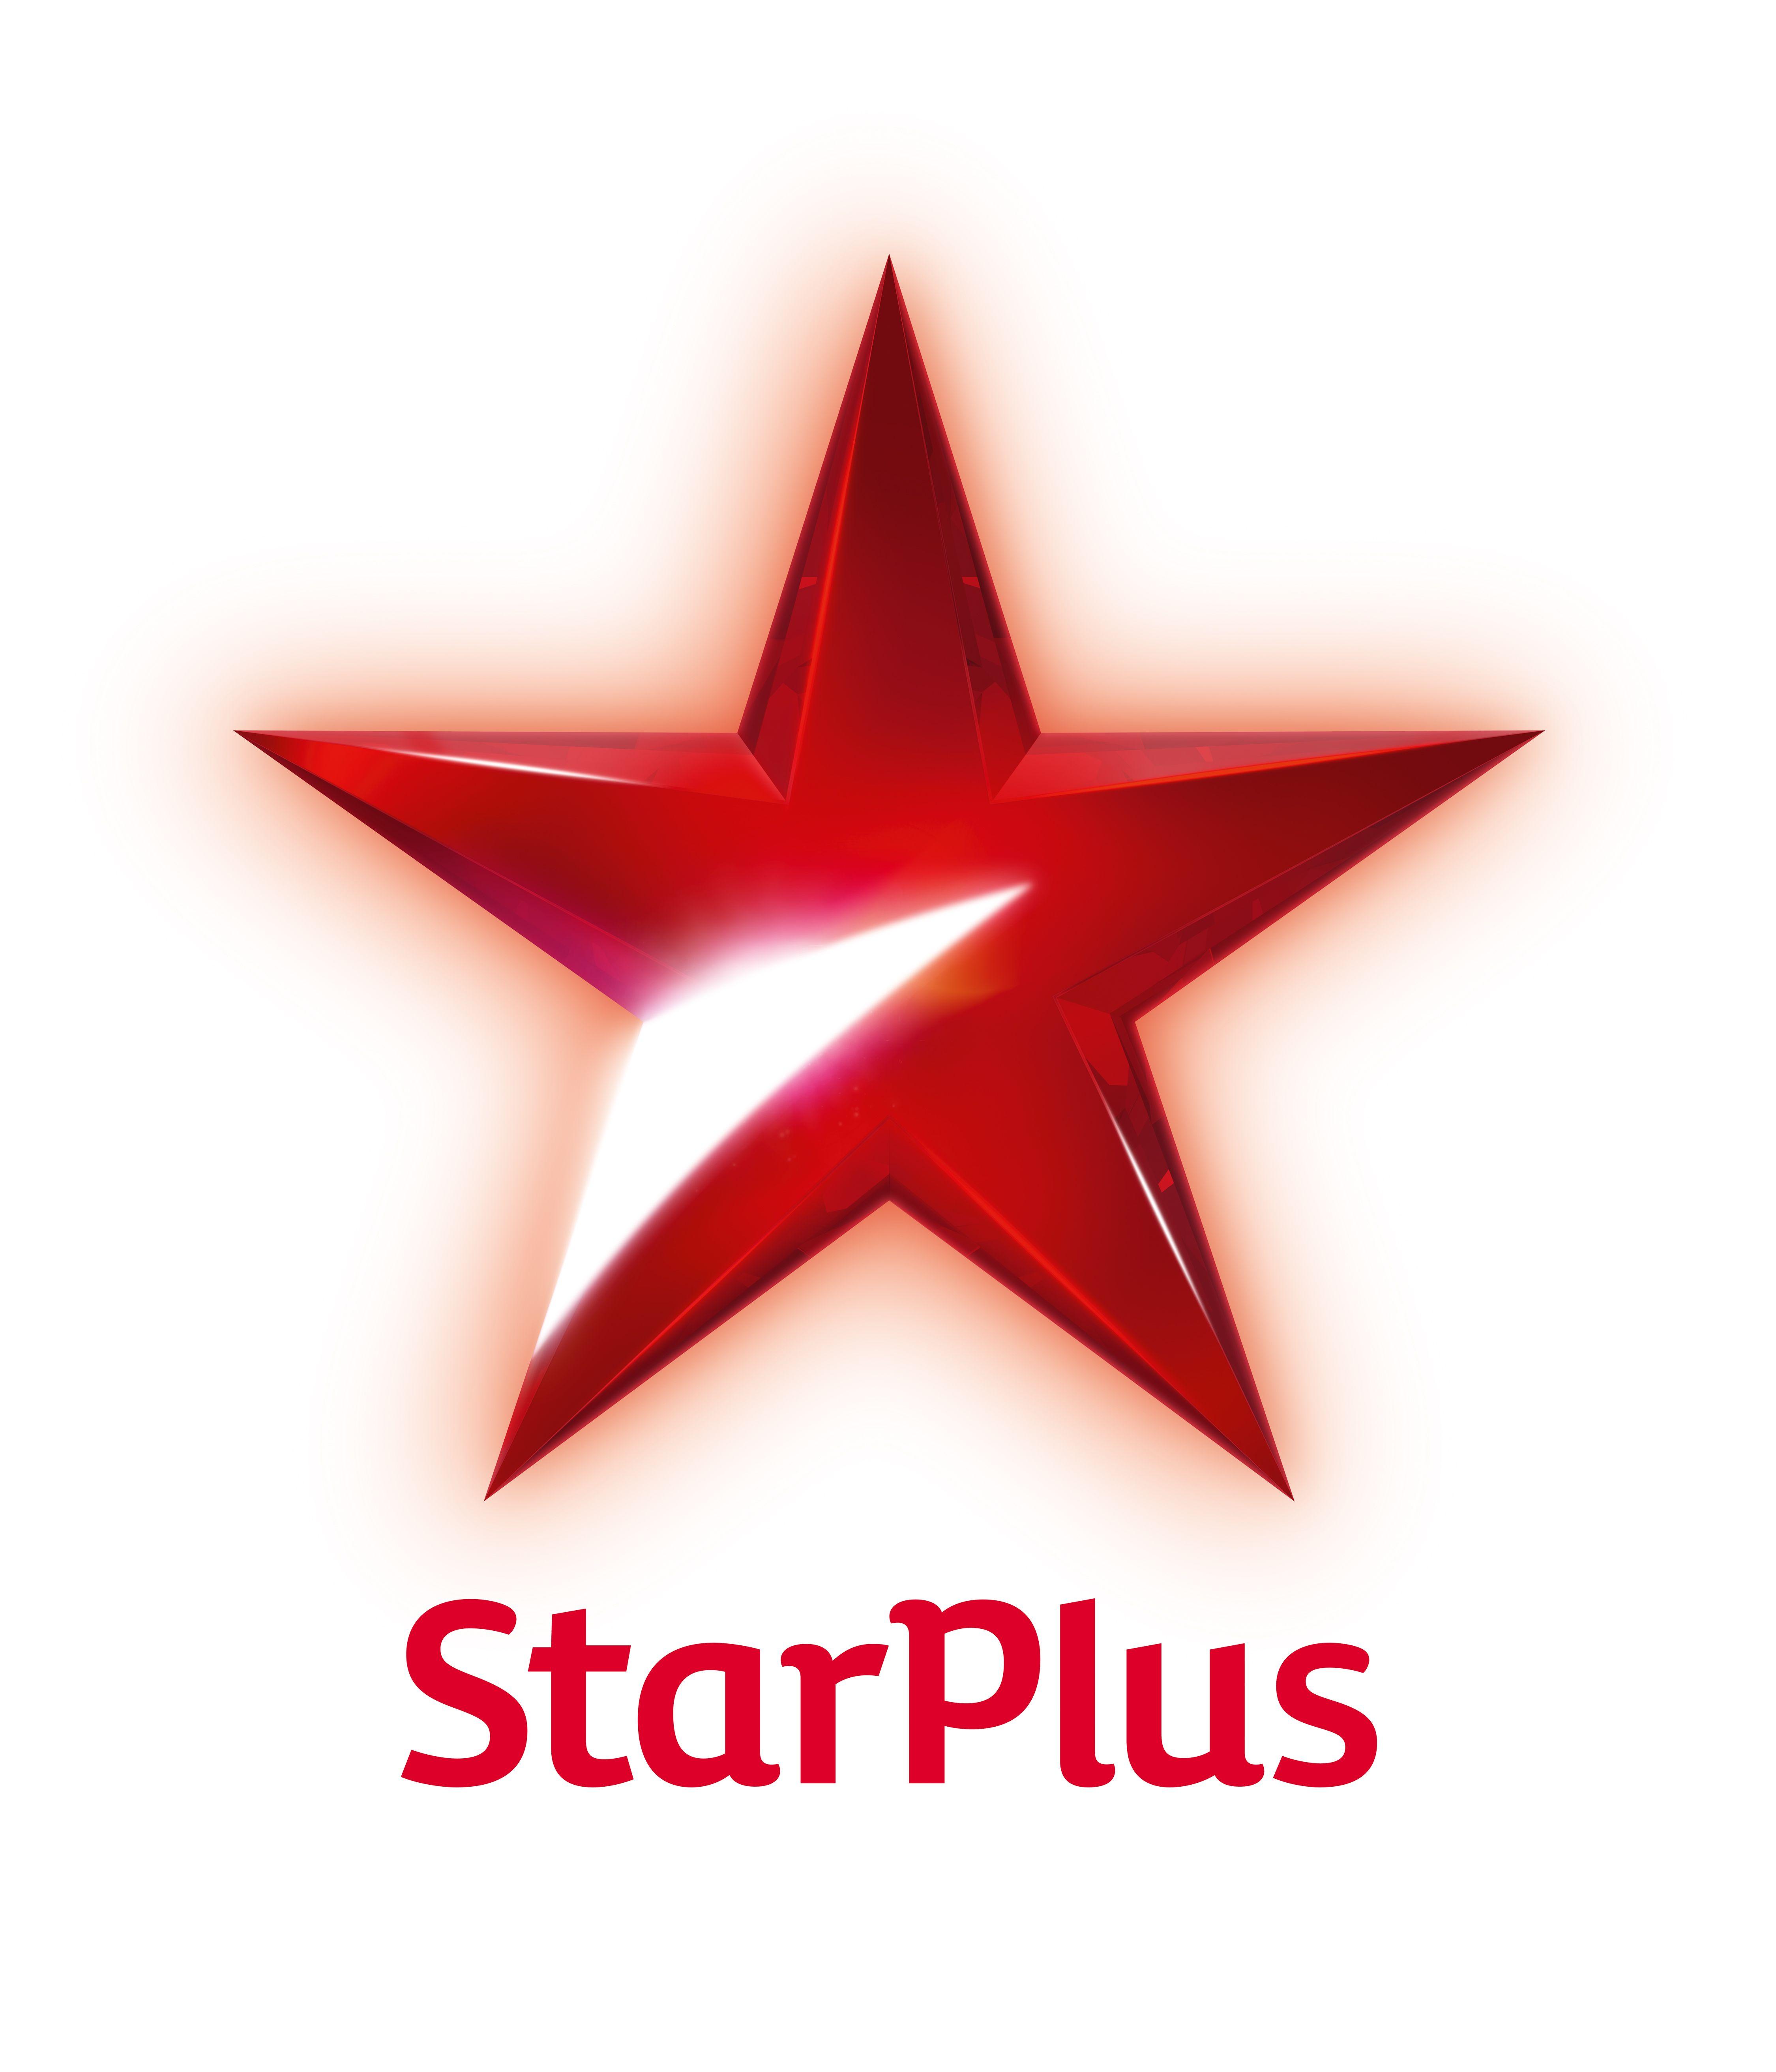 Red Plus Logo - Star Plus logo – More About Advertising